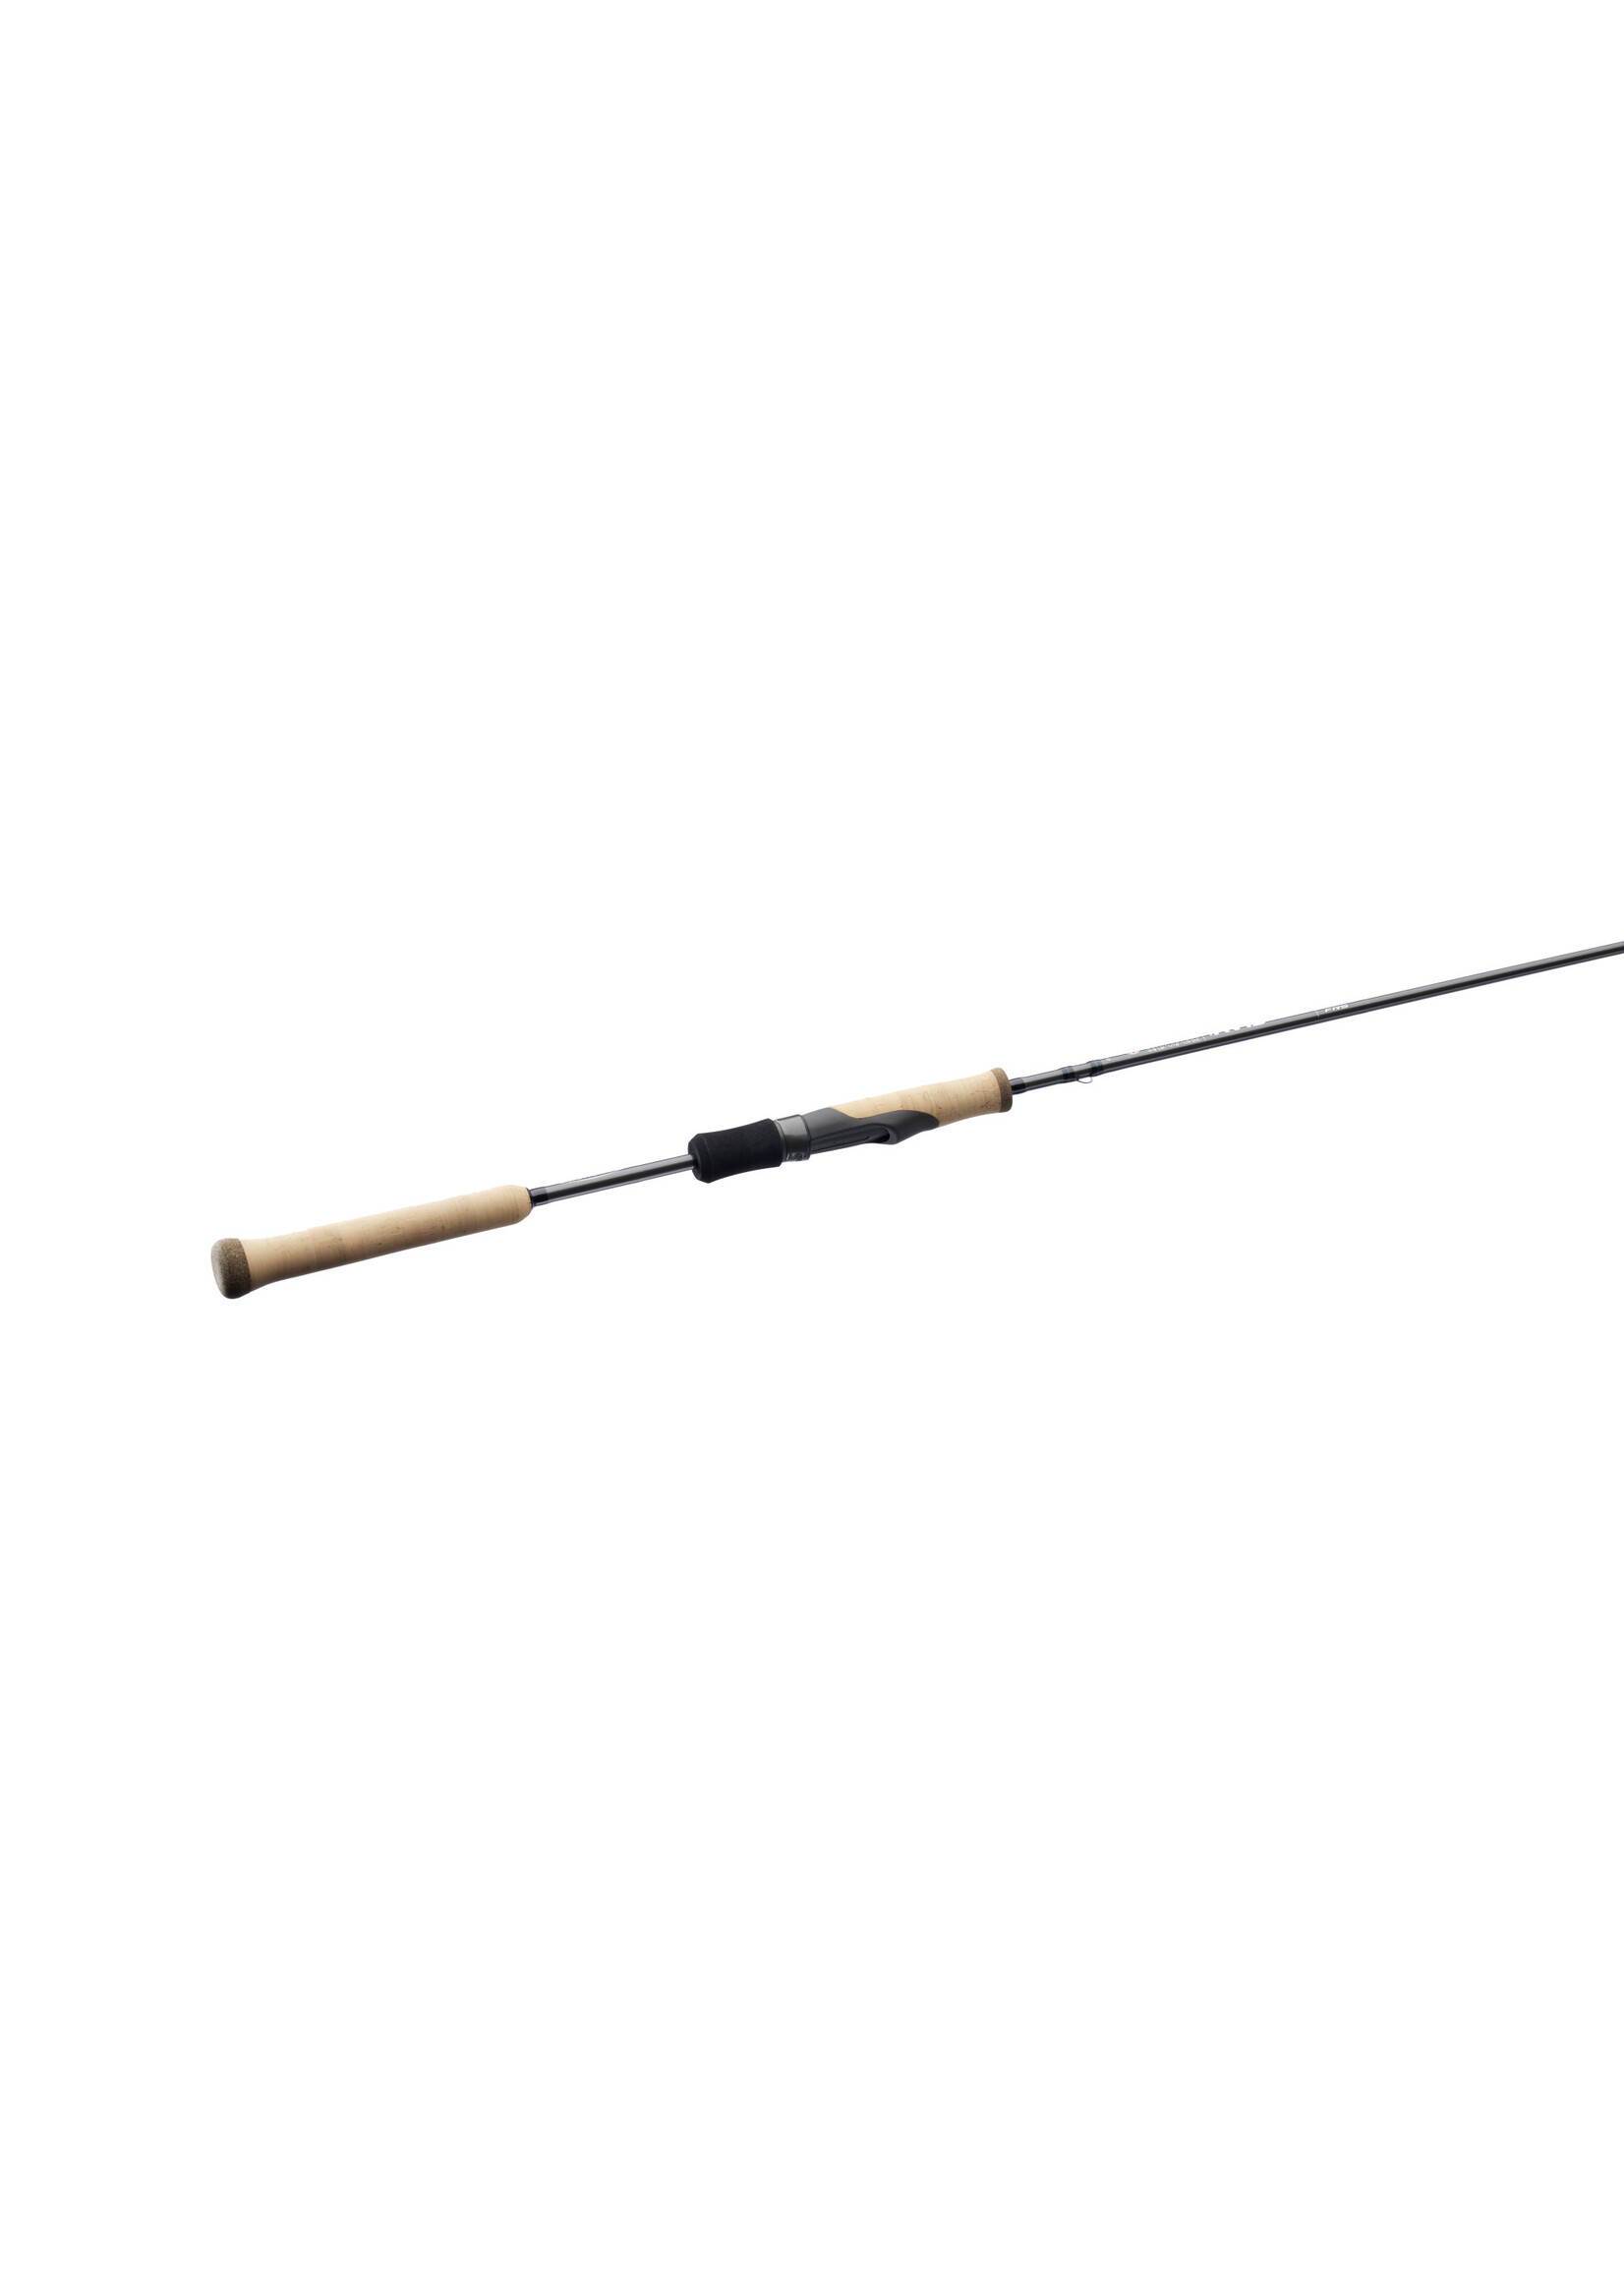 6 ft. Ultra Light Avid Series Panfish Rod